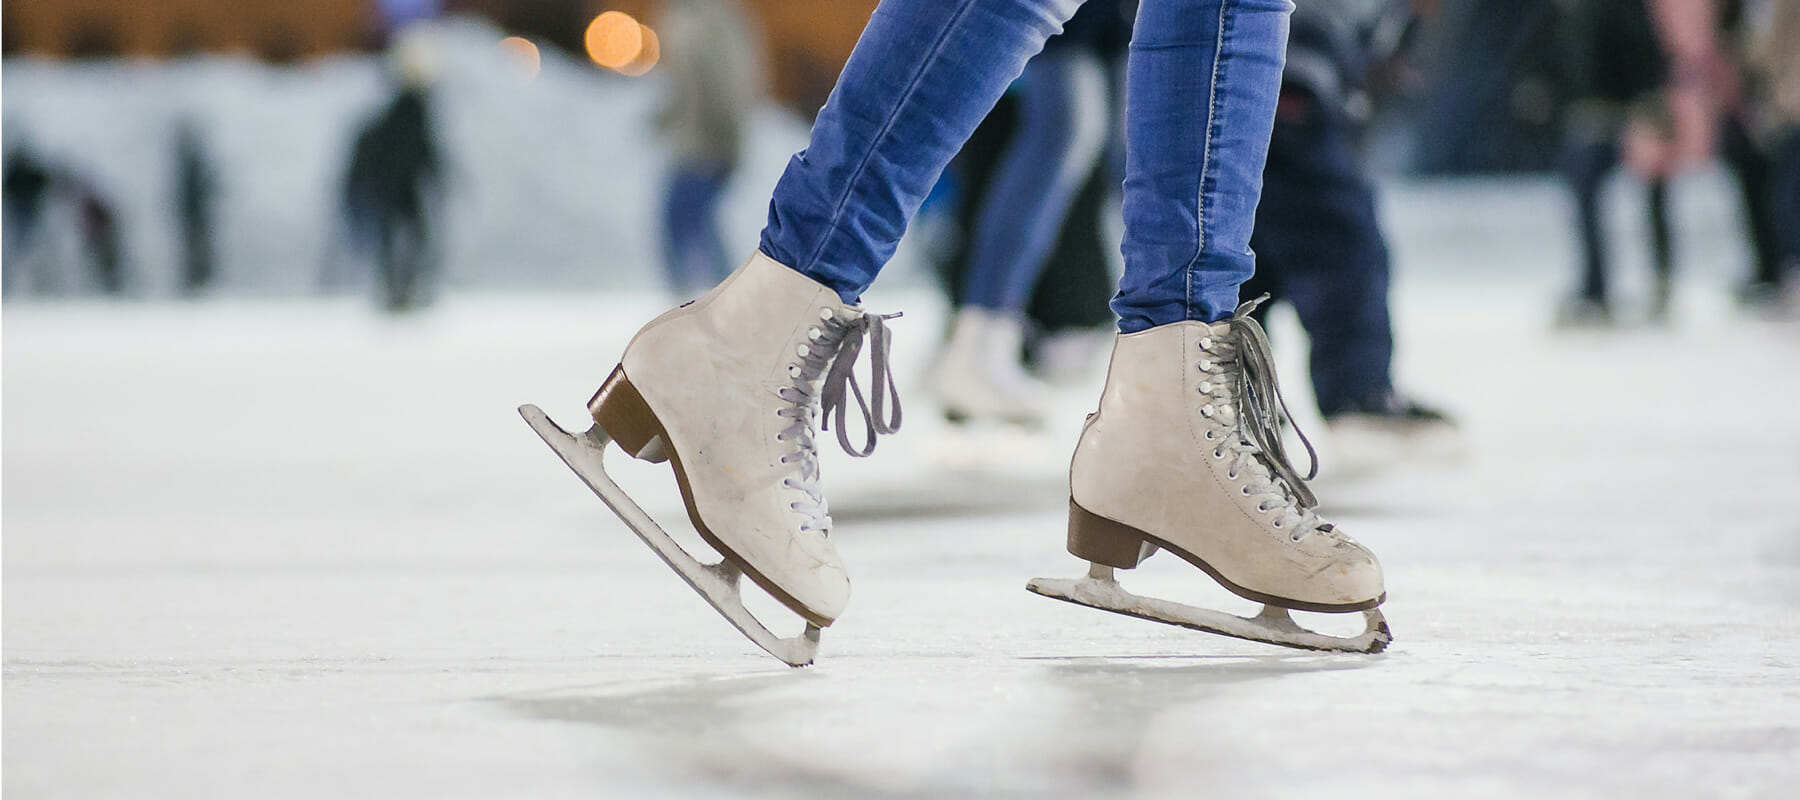 5 Ways to Avoid Ice Skating Injuries